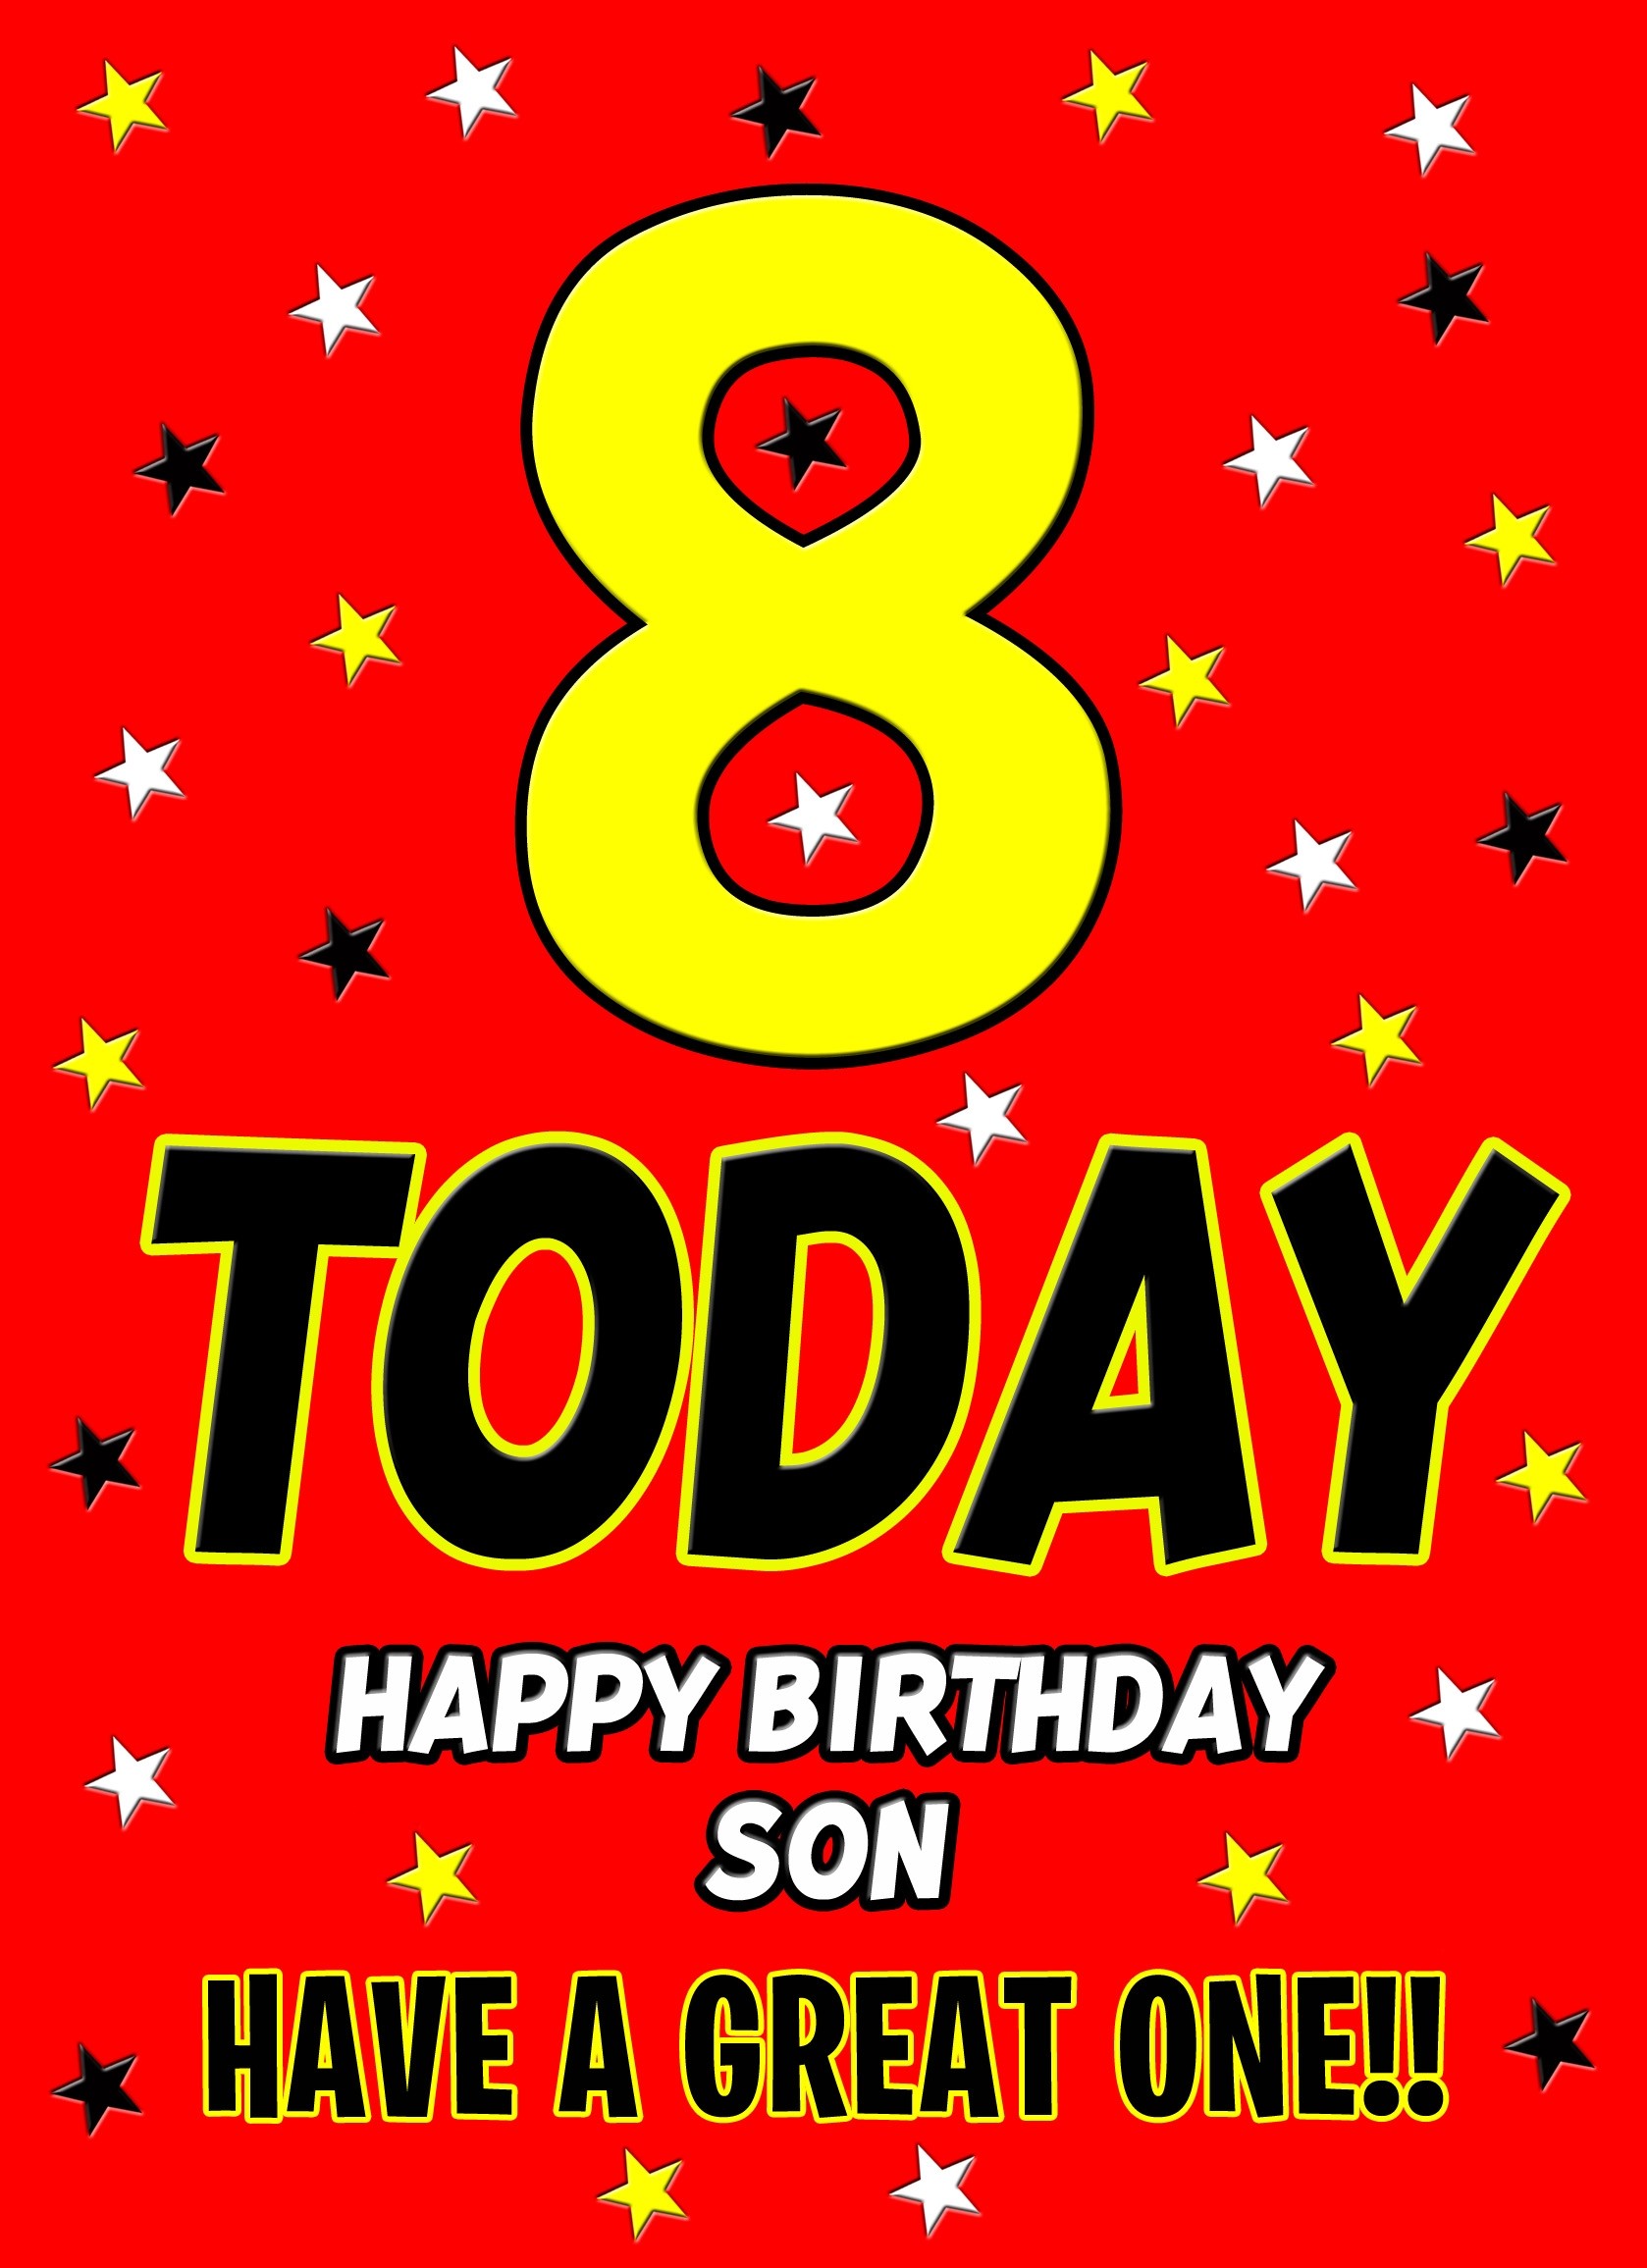 8 Today Birthday Card (Son)